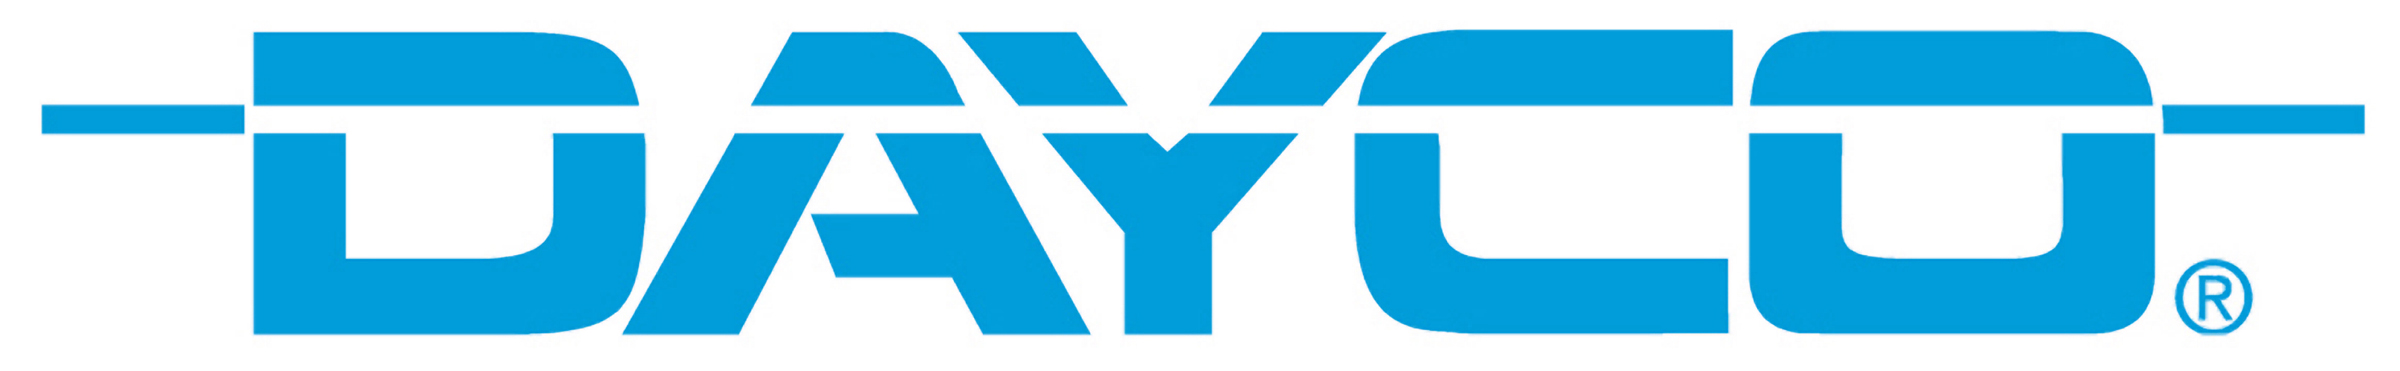 Dayco蓝色标志.jpg